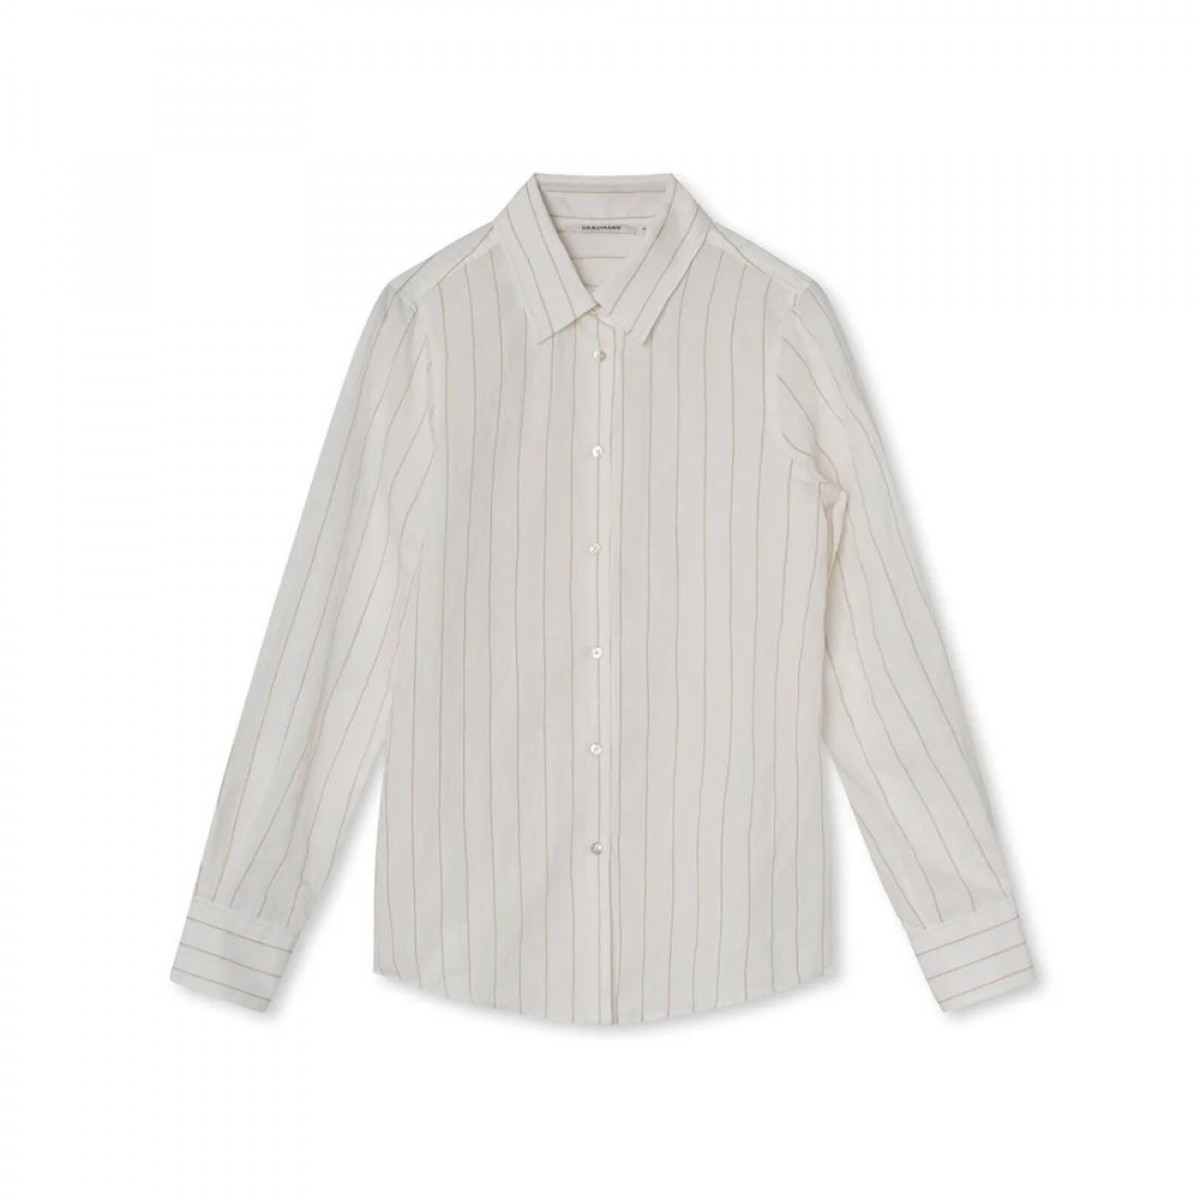 suzie shirt - off white stripe - front